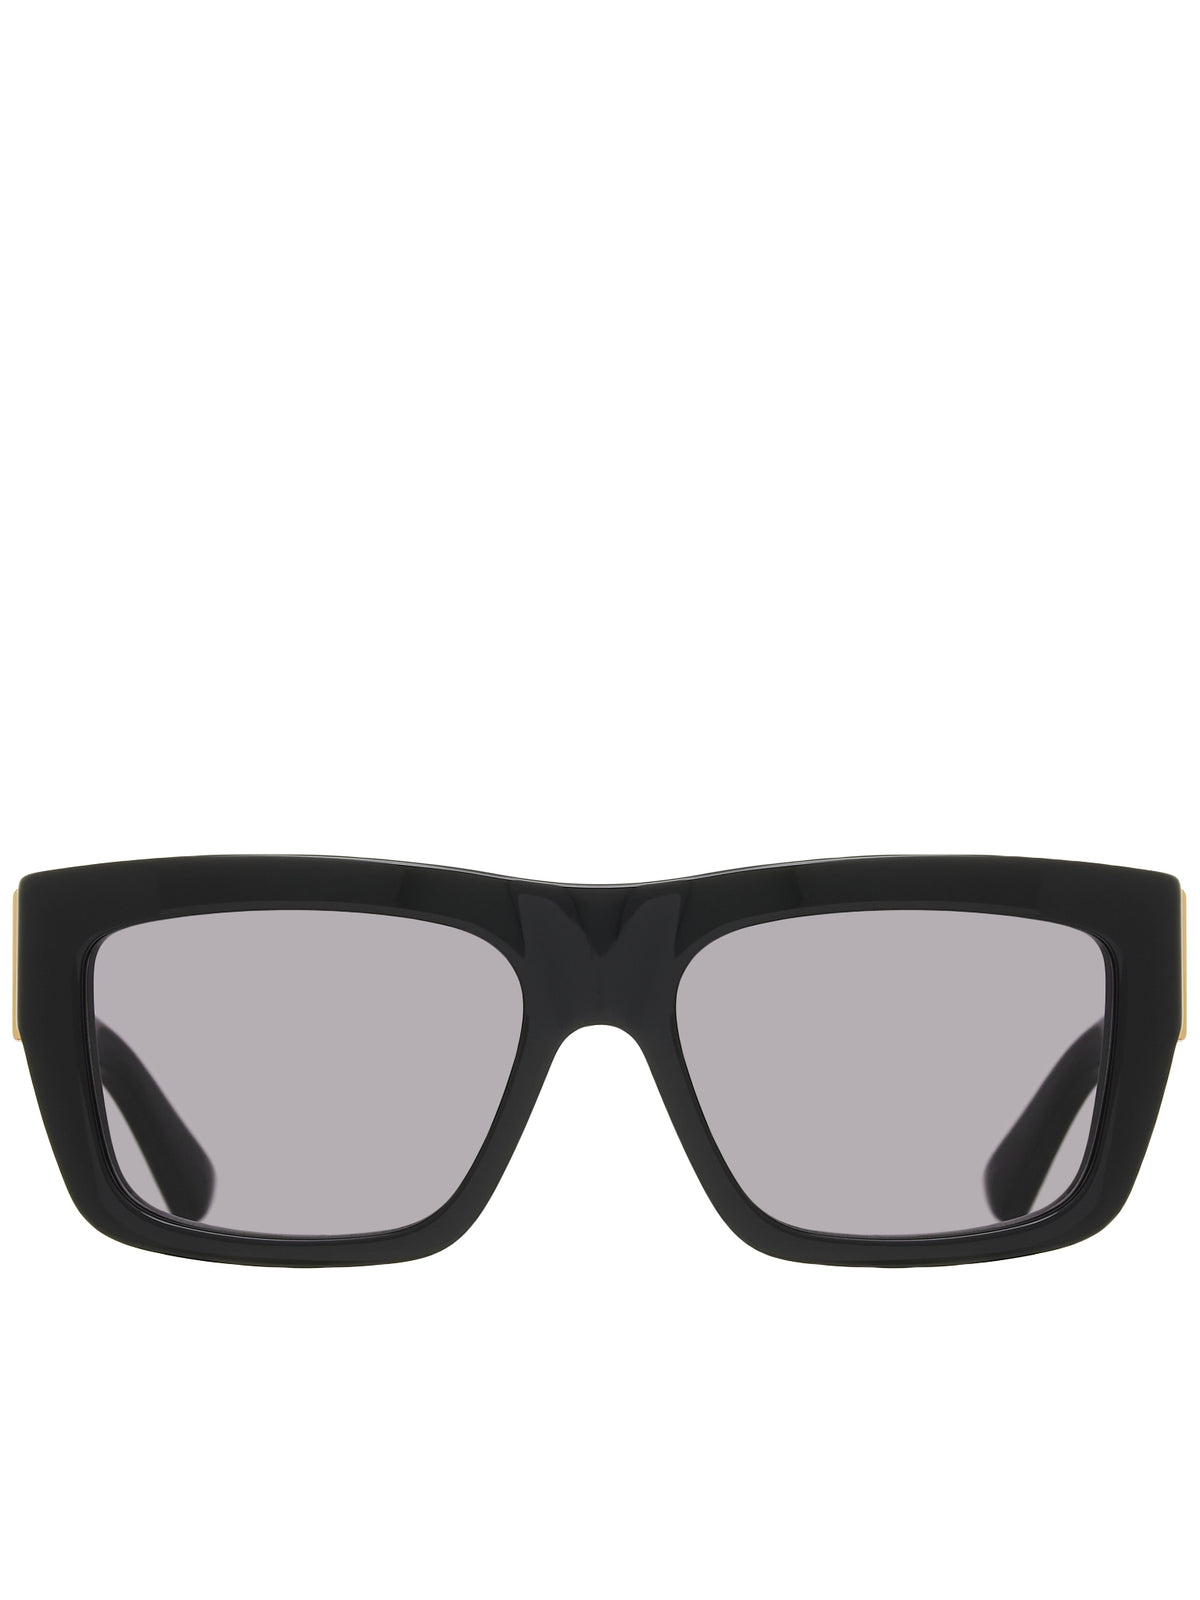 Bottega Veneta Angle Sunglasses | H. Lorenzo - front